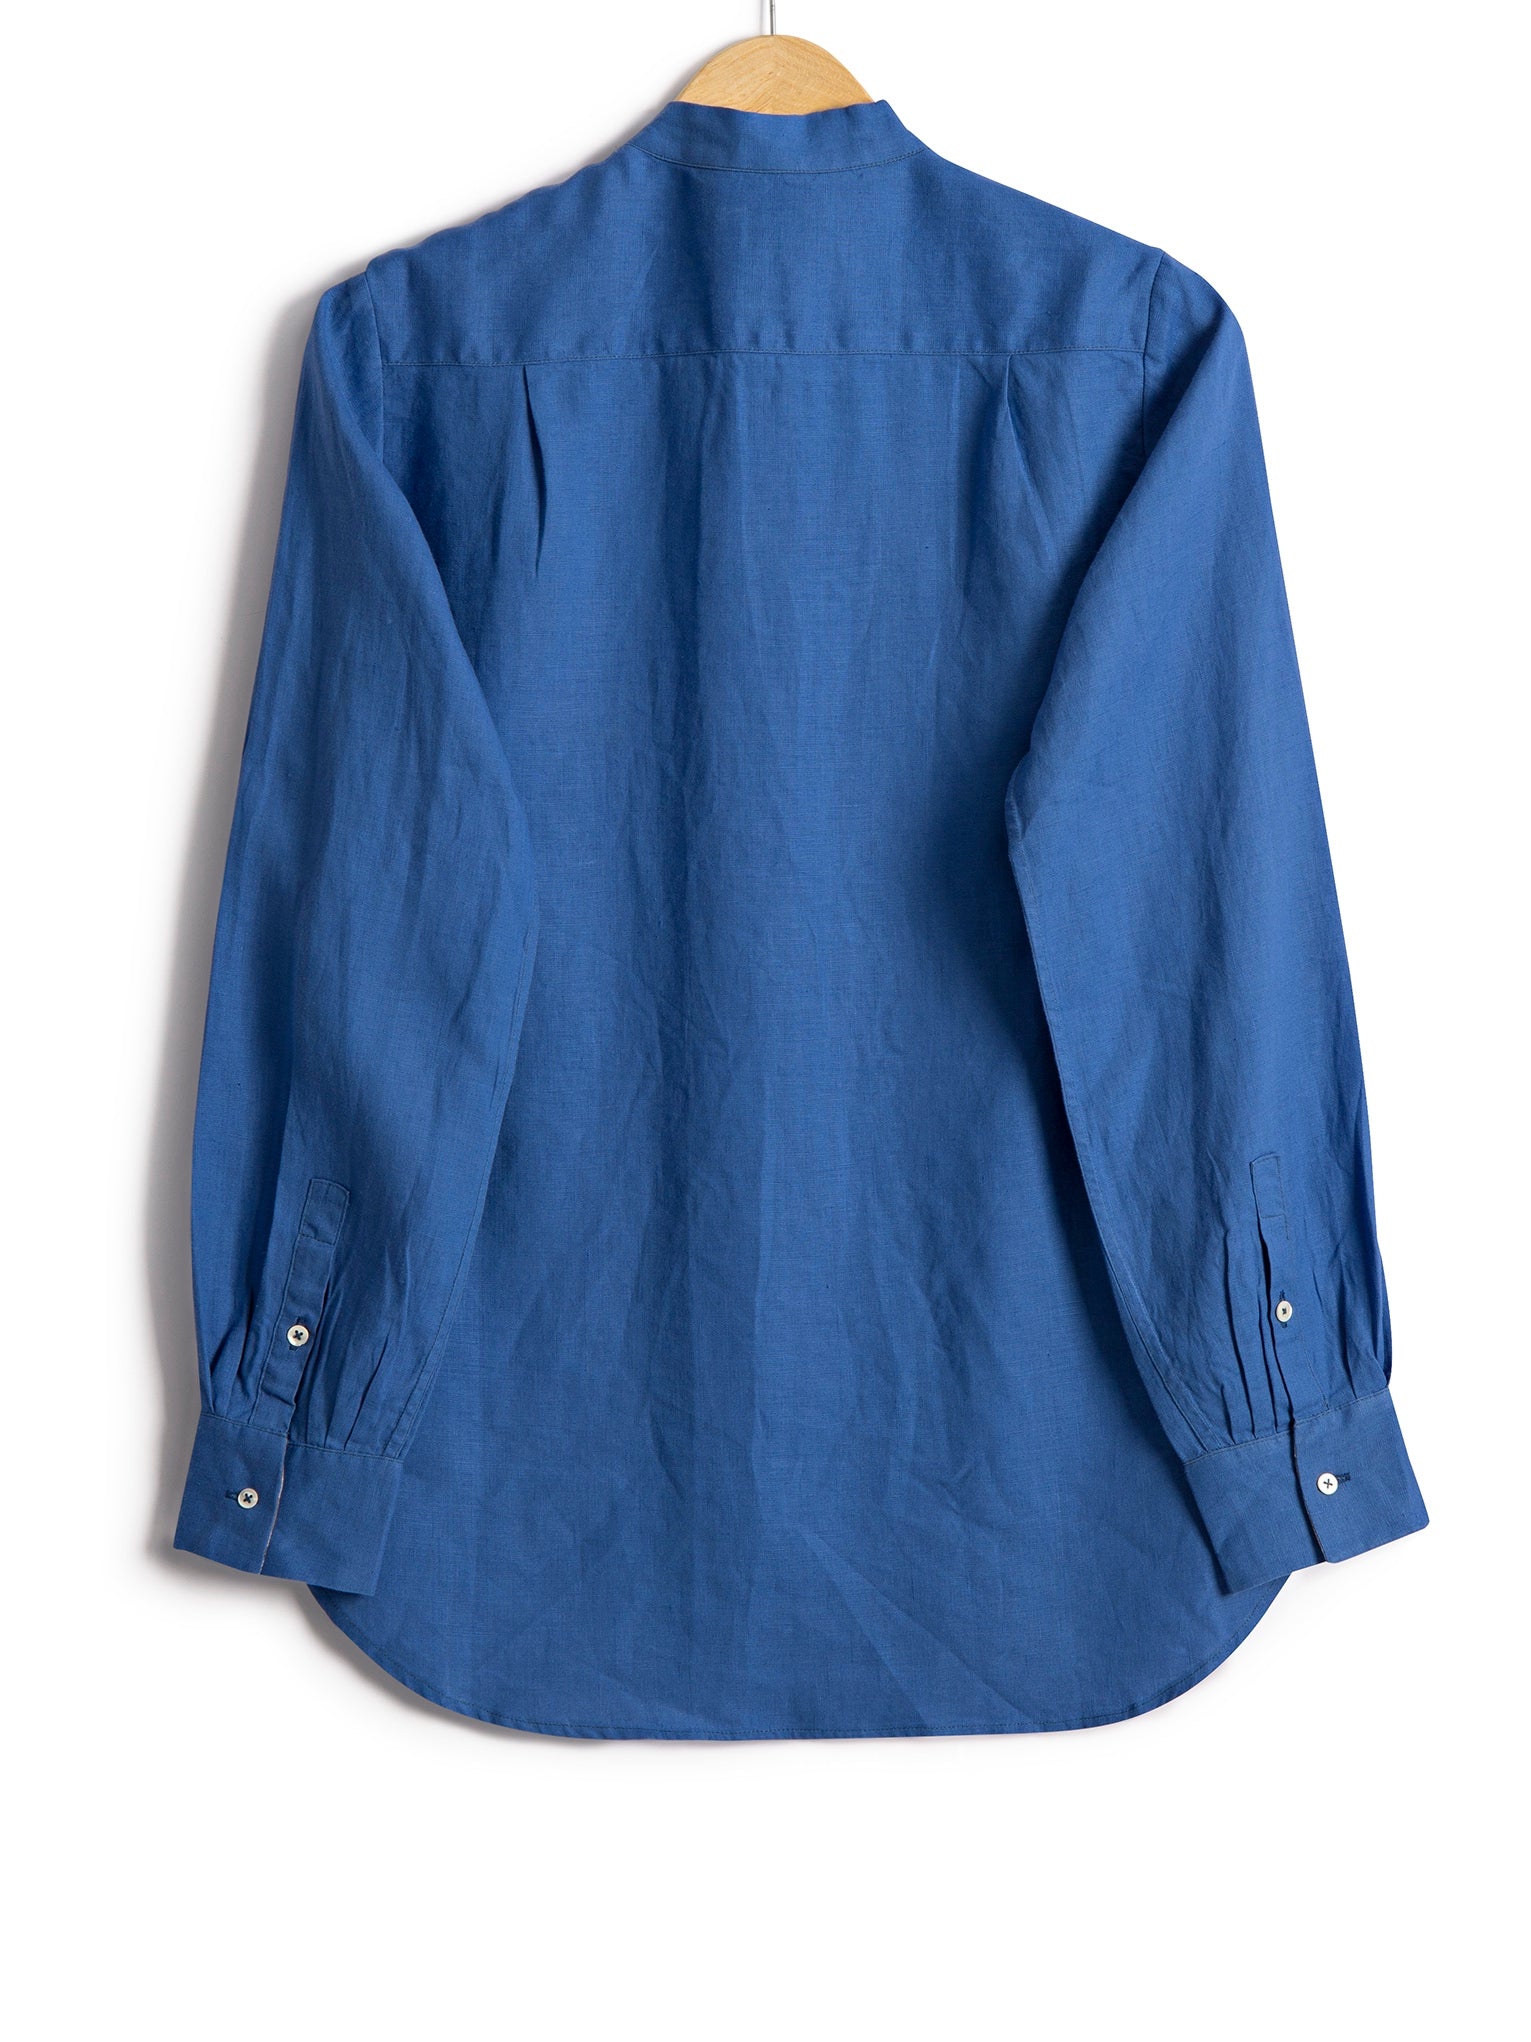 Bib Shirt in Persian Blue Linen, Shirt, Hickman & Bousfied - Hickman & Bousfield, Safari and Travel Clothing